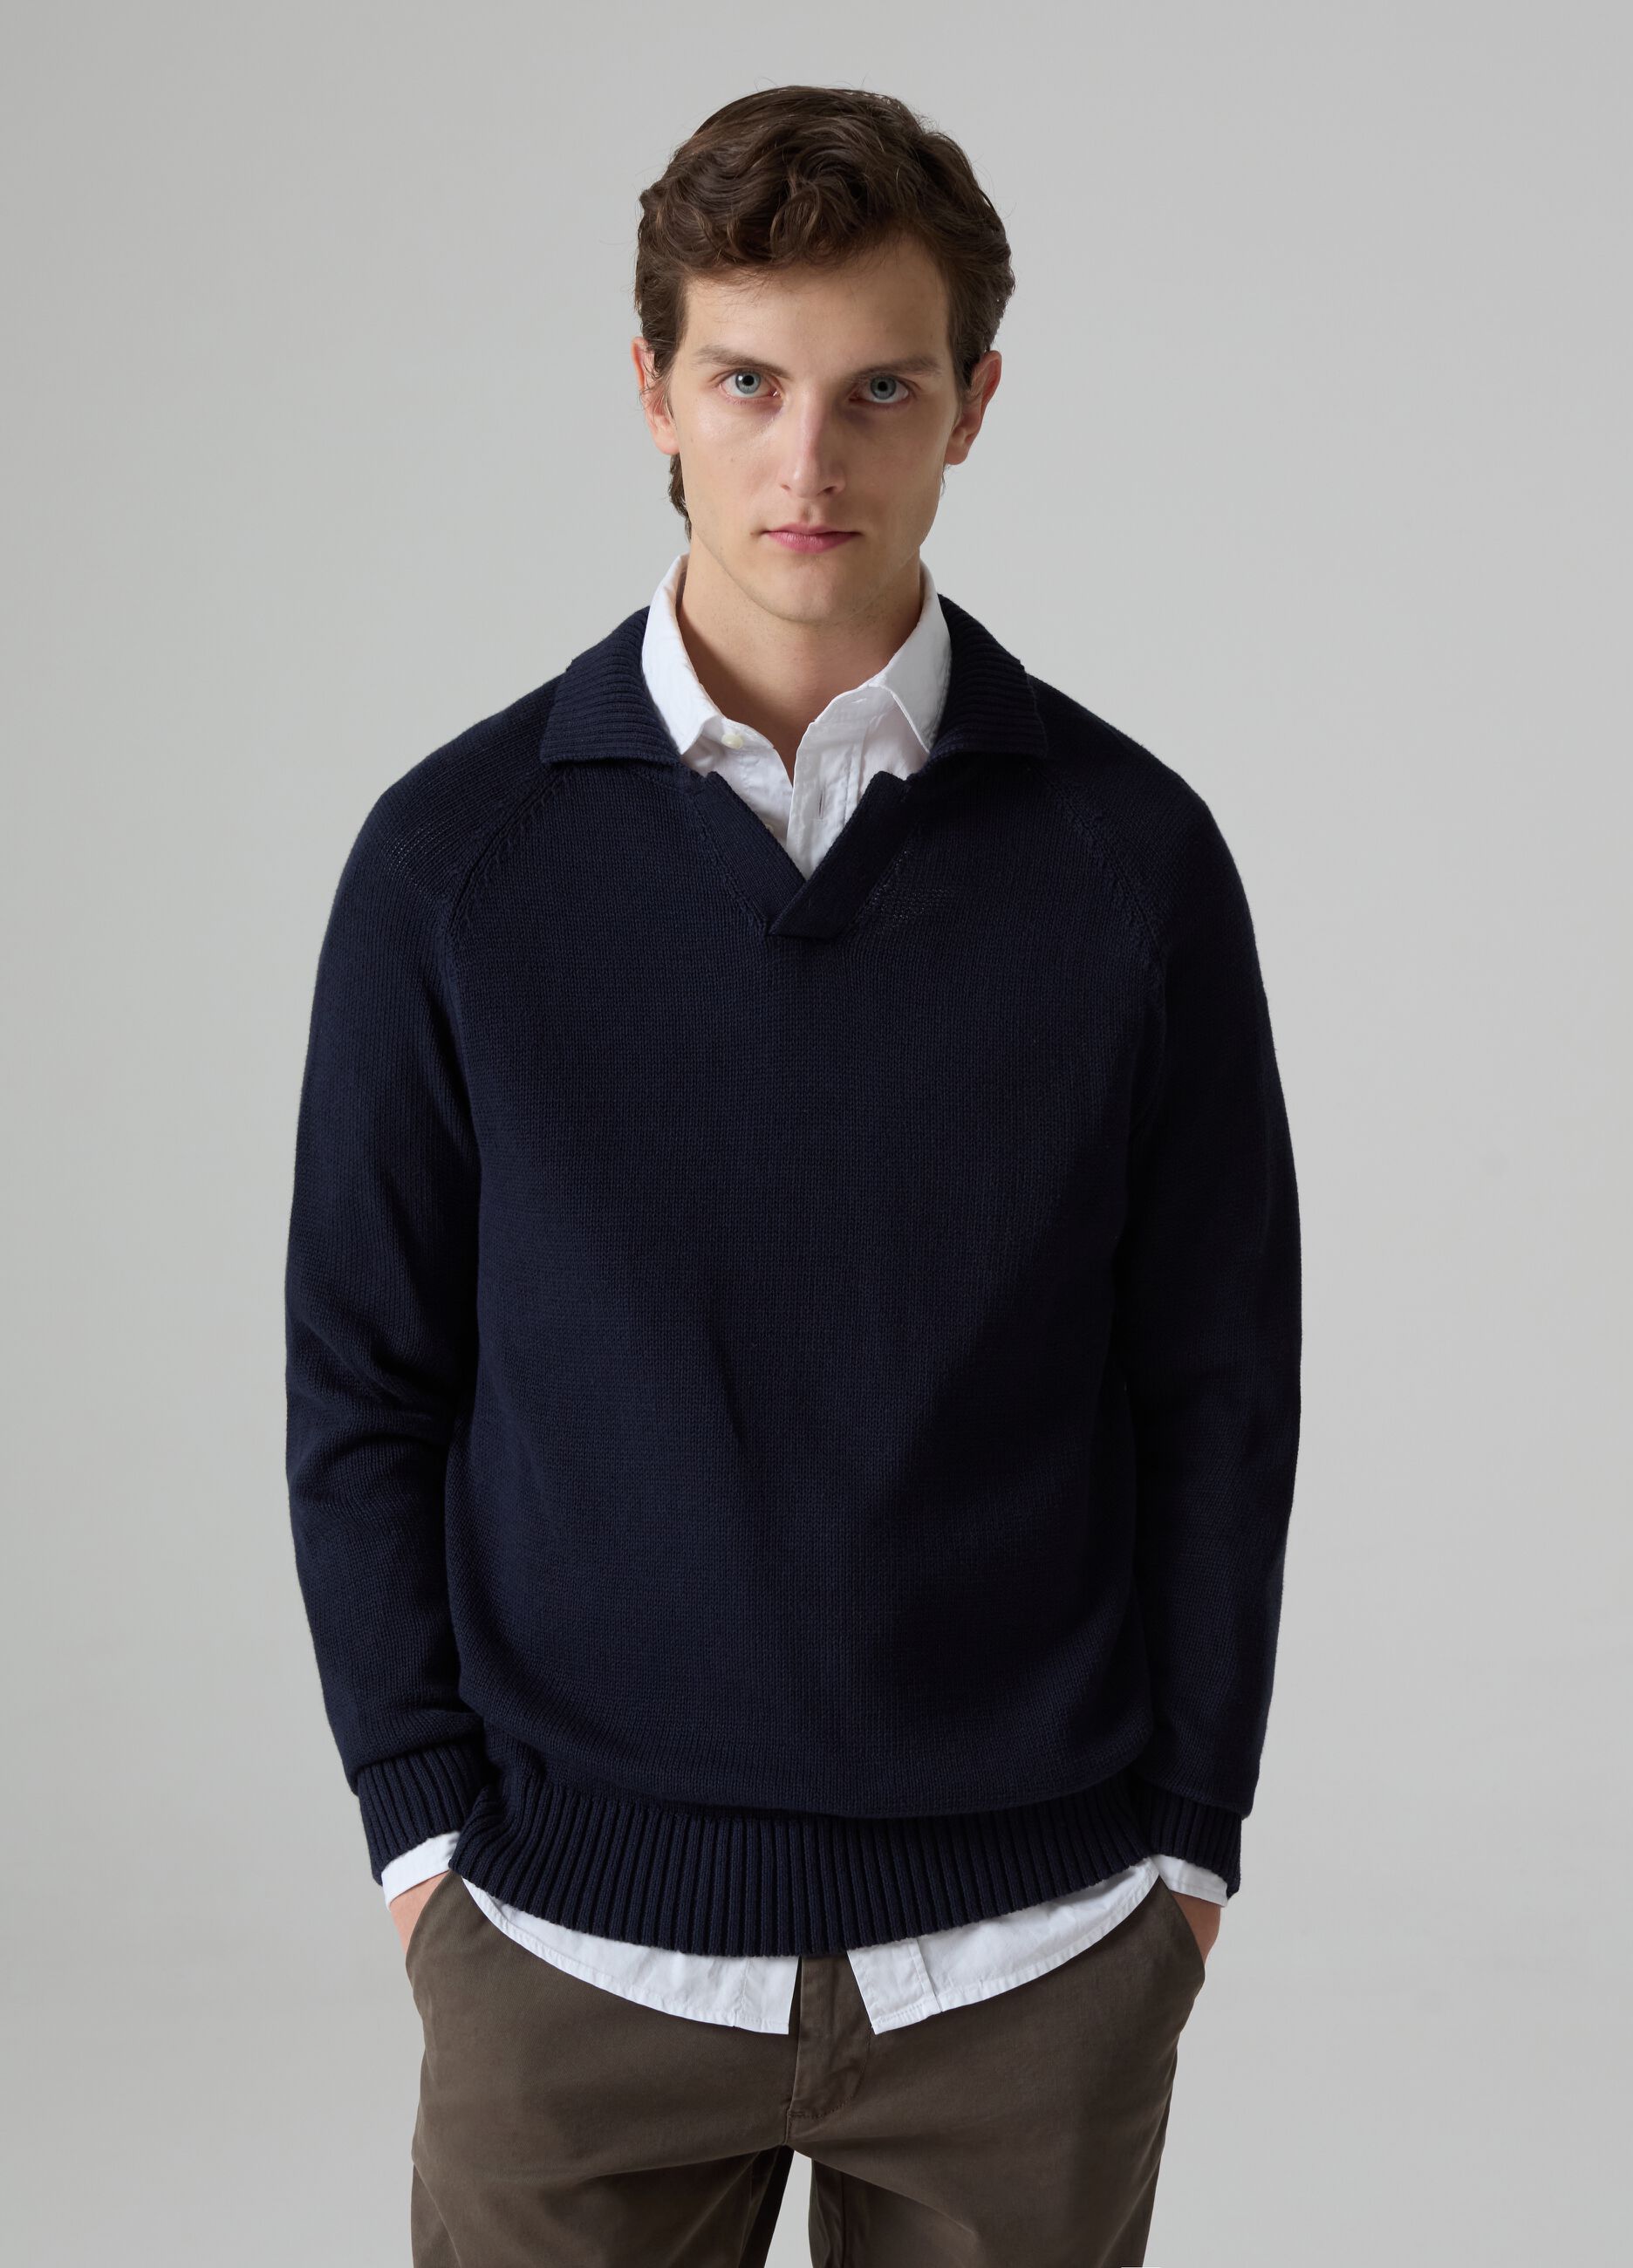 Men's Knitwear: Italian Pullover, Cardigans & More | PIOMBO